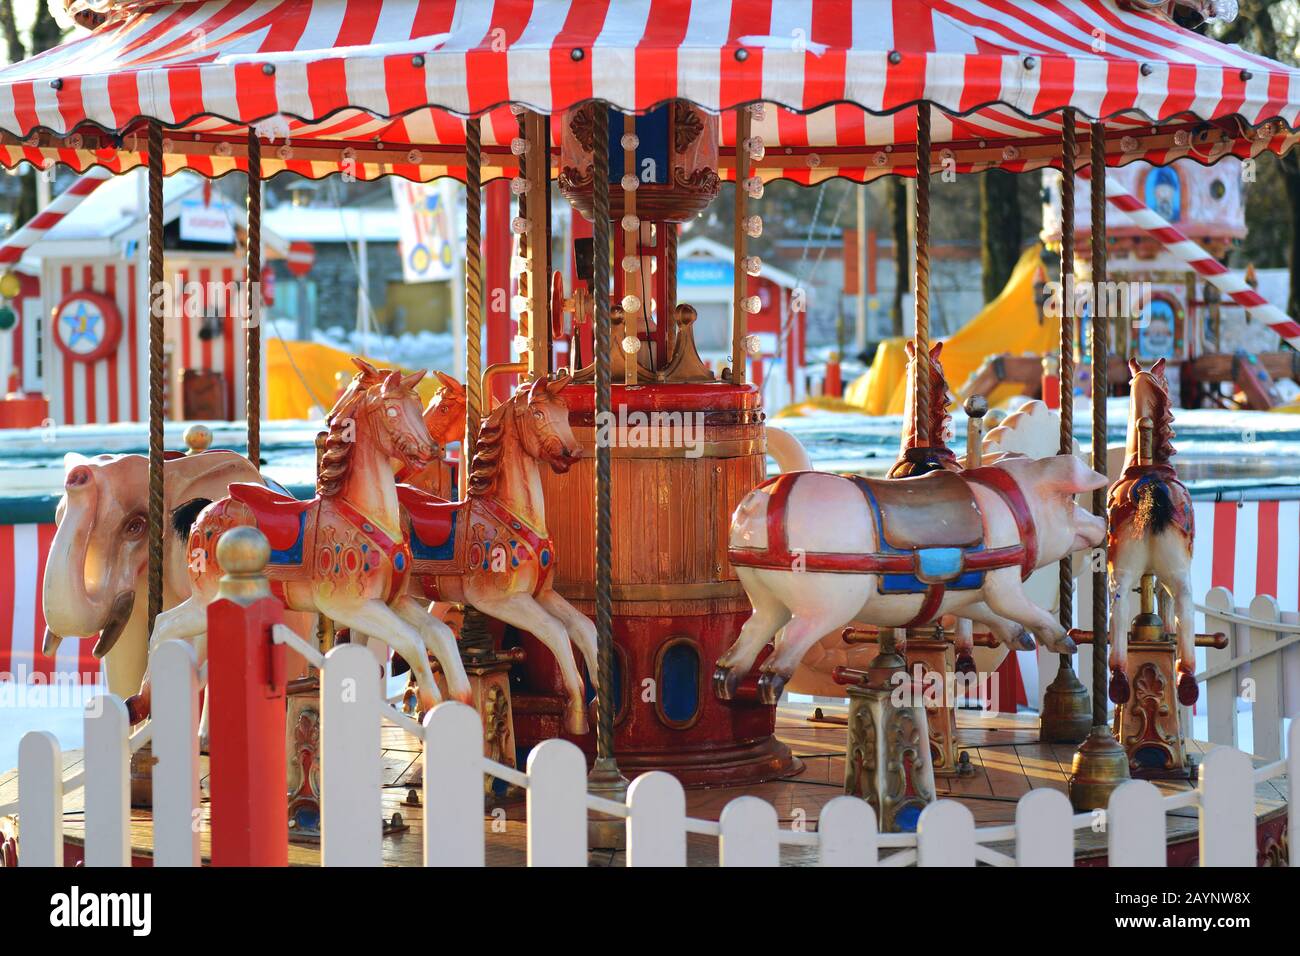 Horses carousel at the amusement entertainment park. Colorful carousel with horses, amusement park element. Children s entertainment, merry-go-round Stock Photo